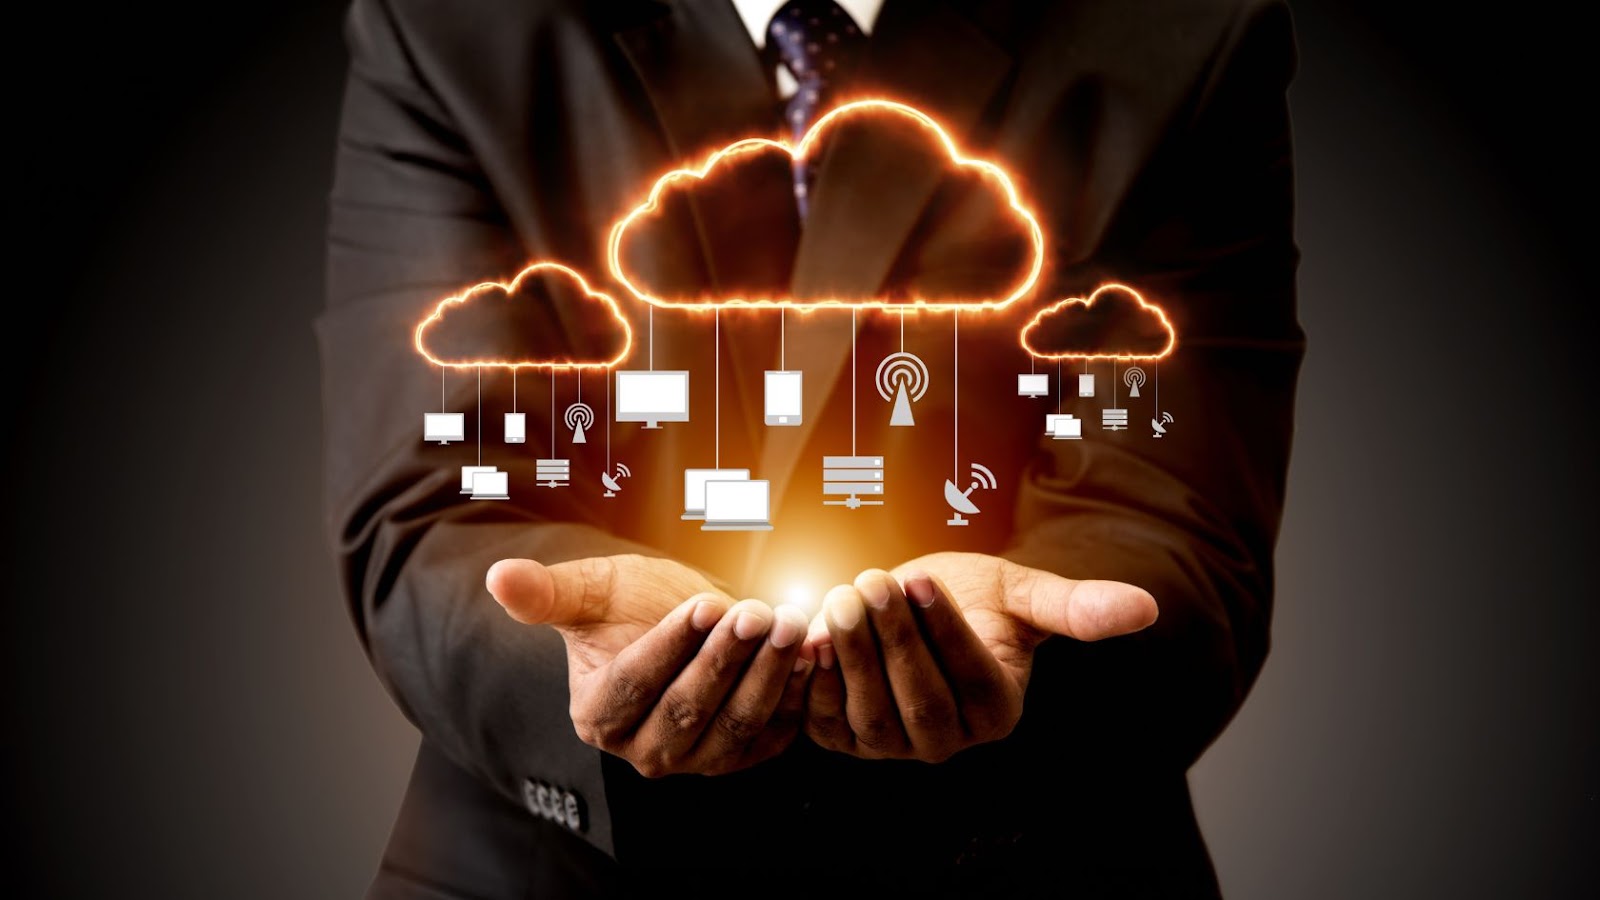 Cloud computing and storage